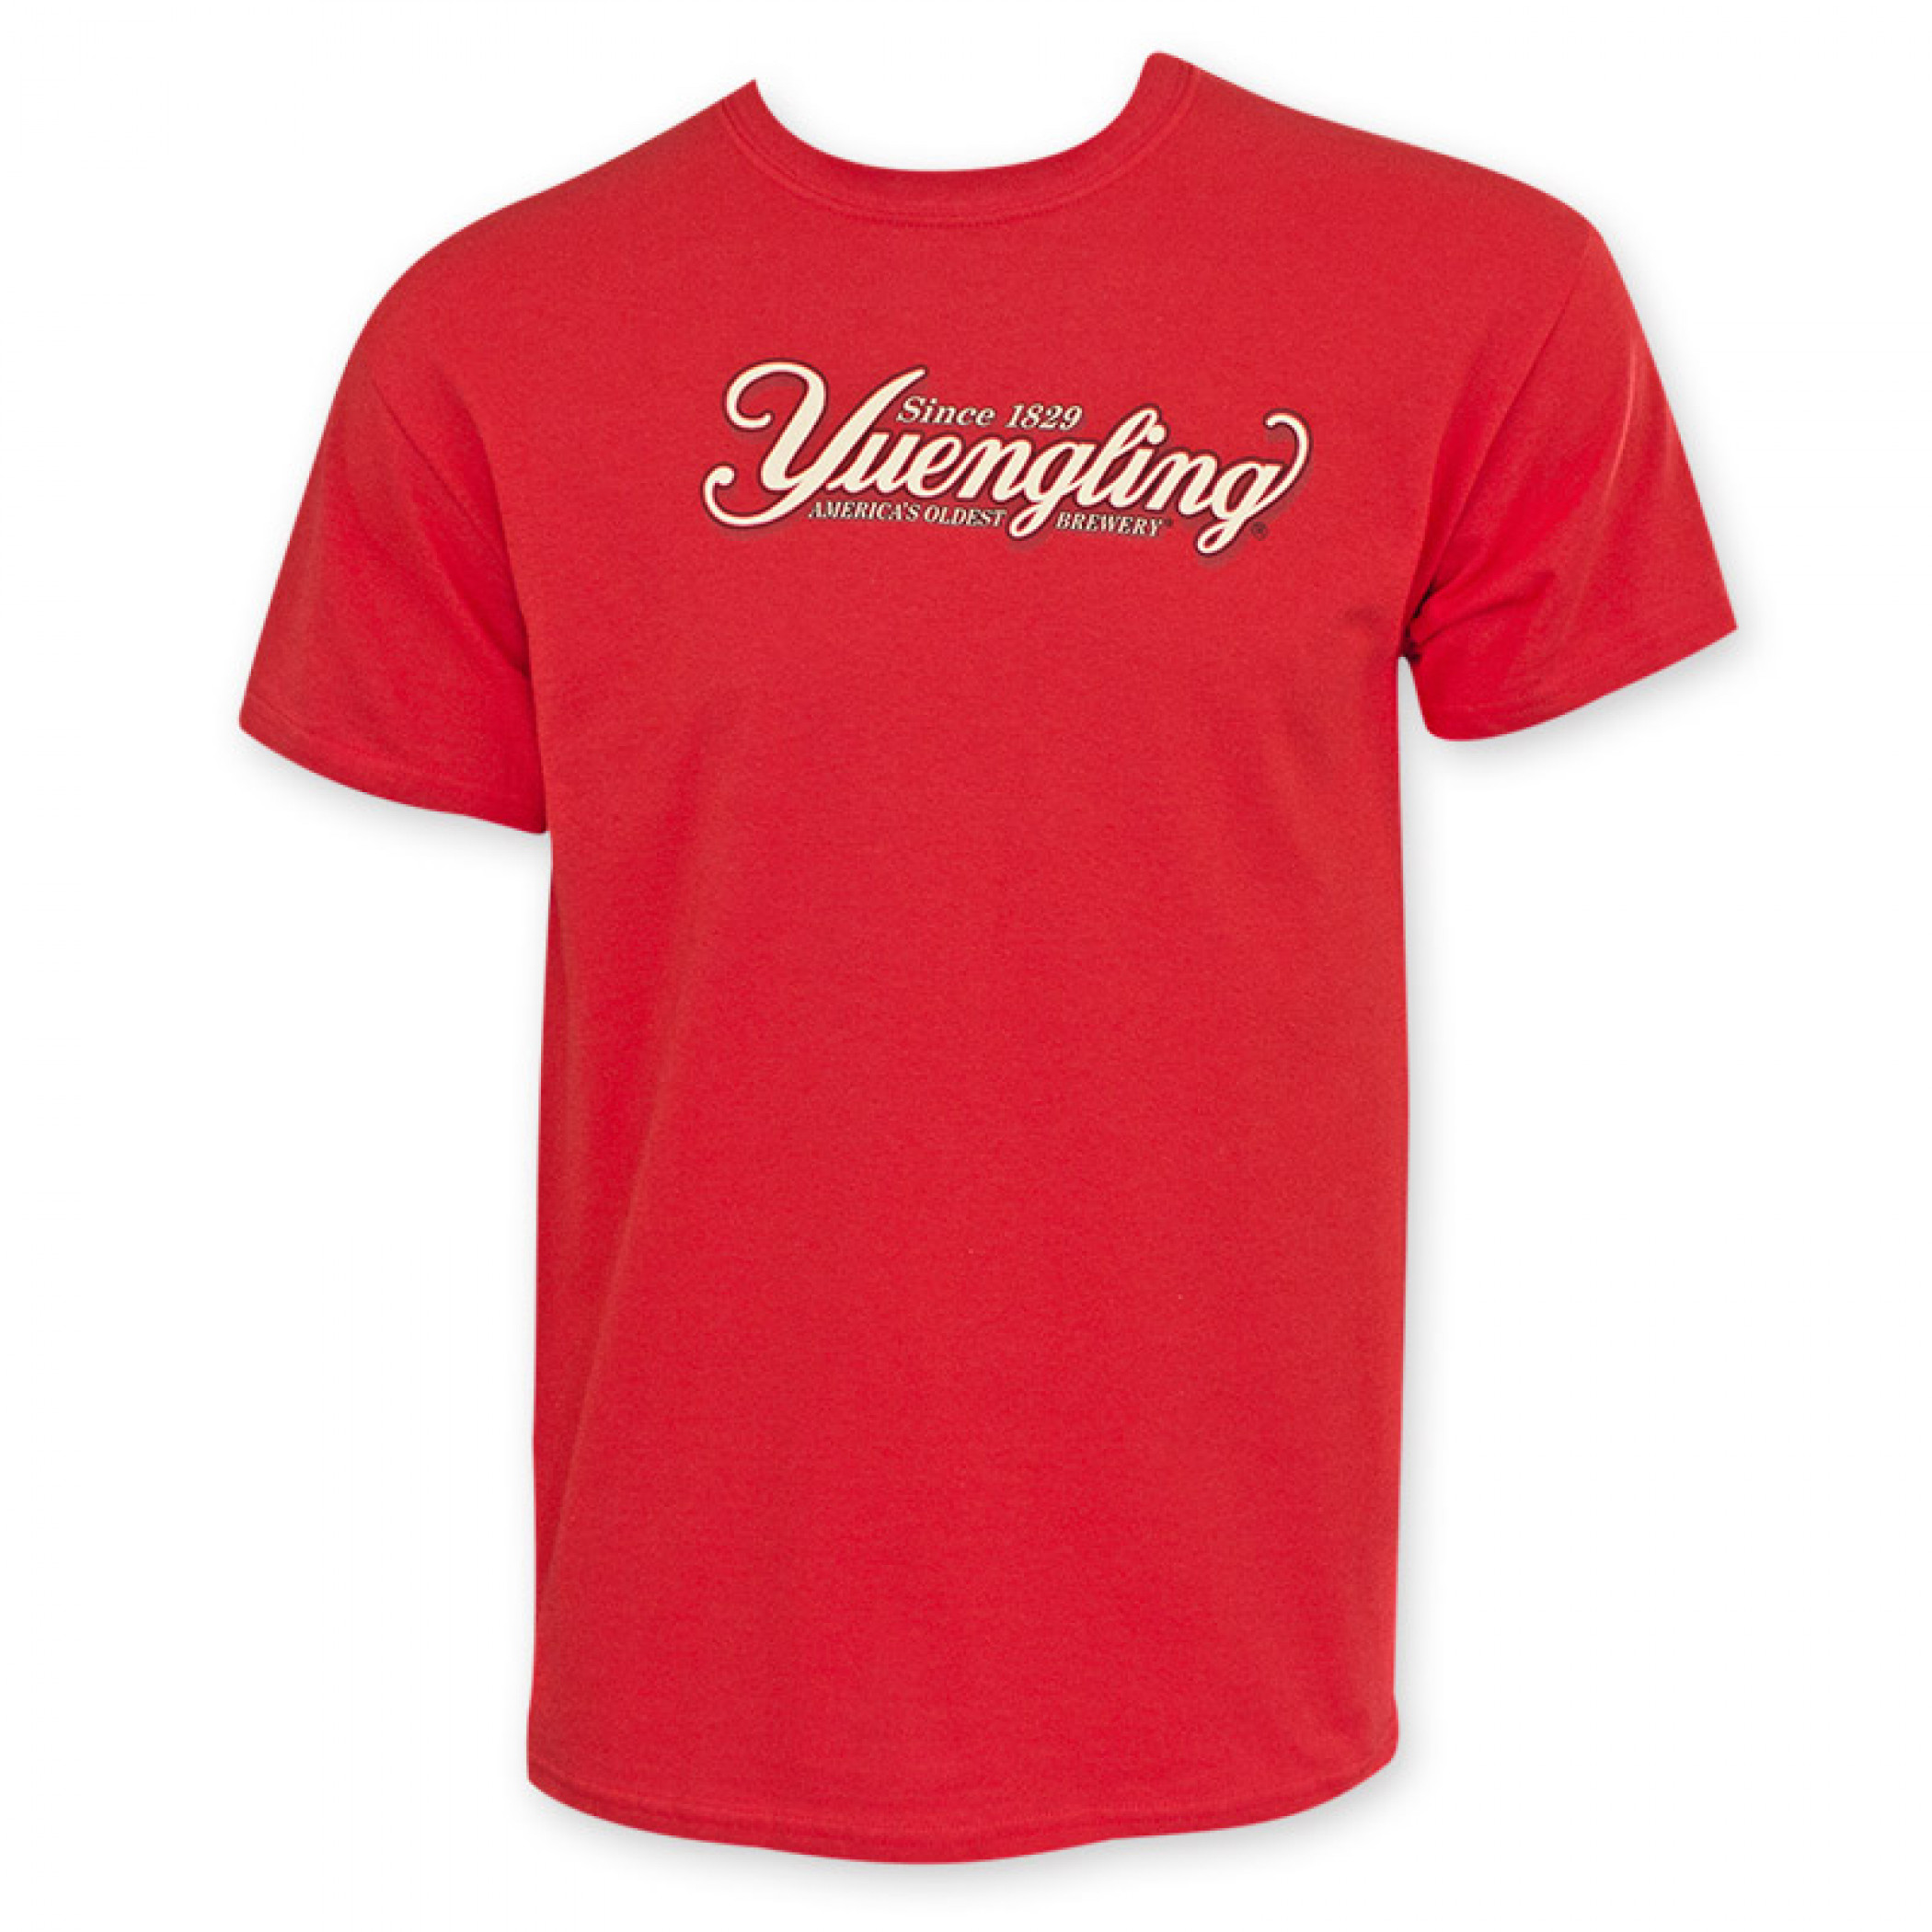 Yuengling Fire Dogs Red T-Shirt